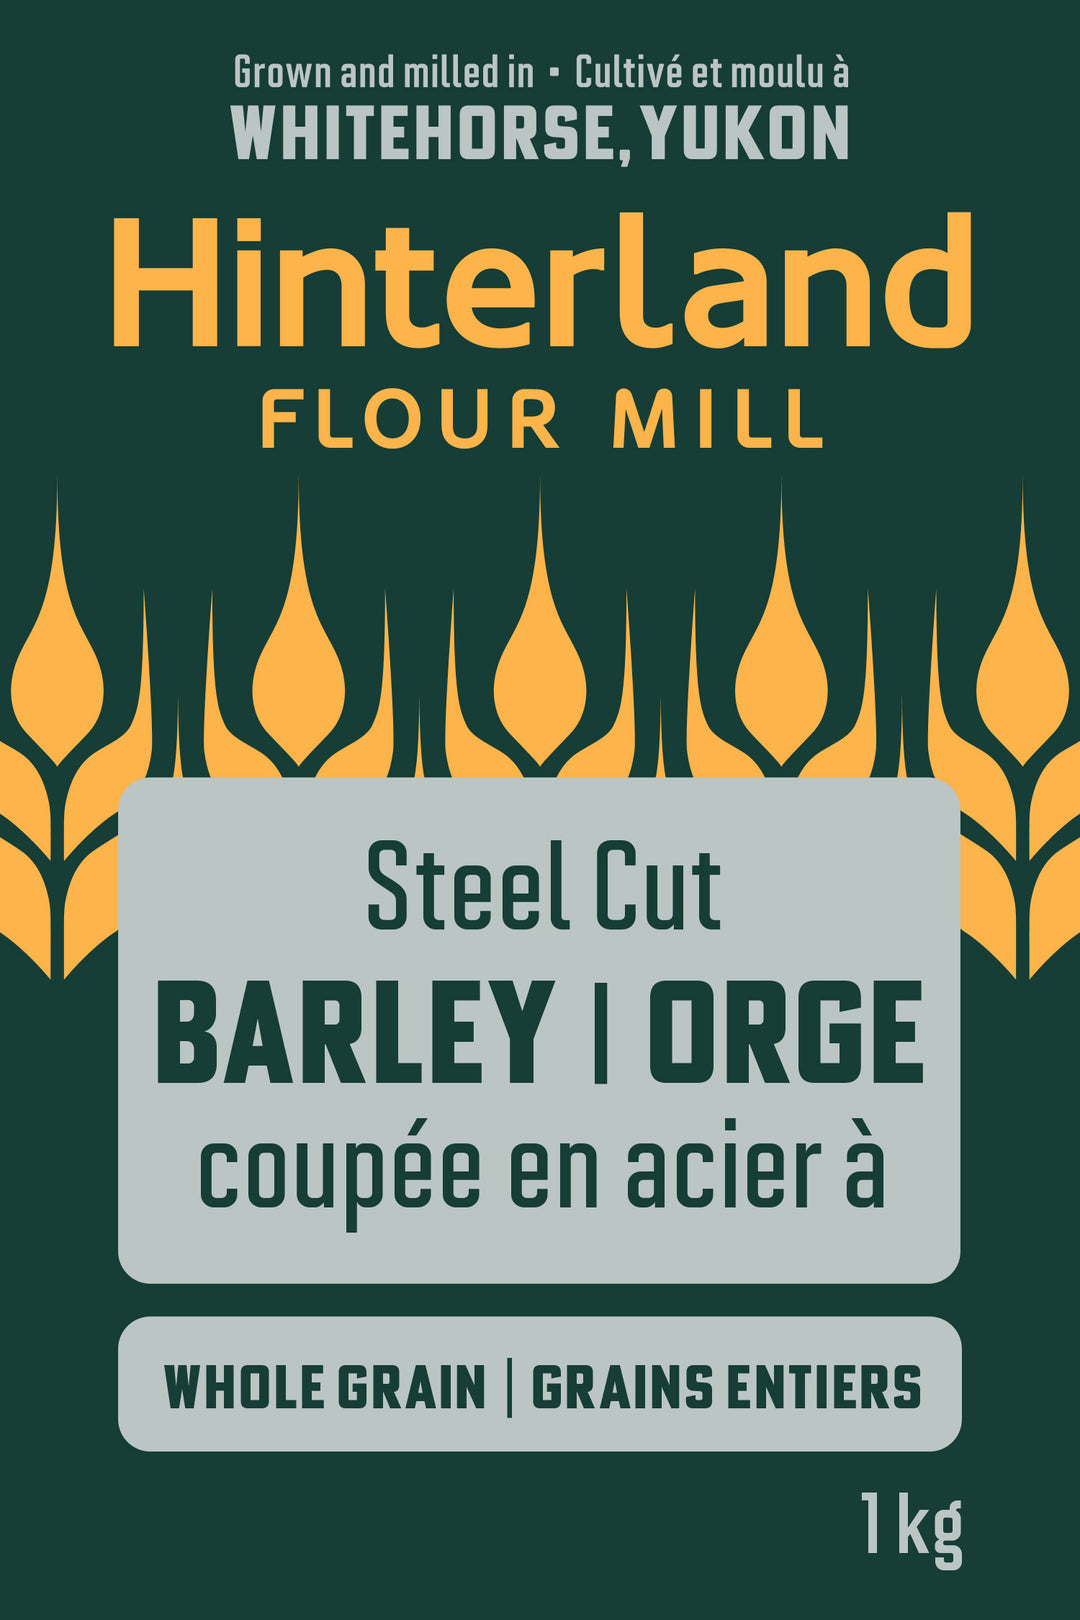 Steel Cut Barley